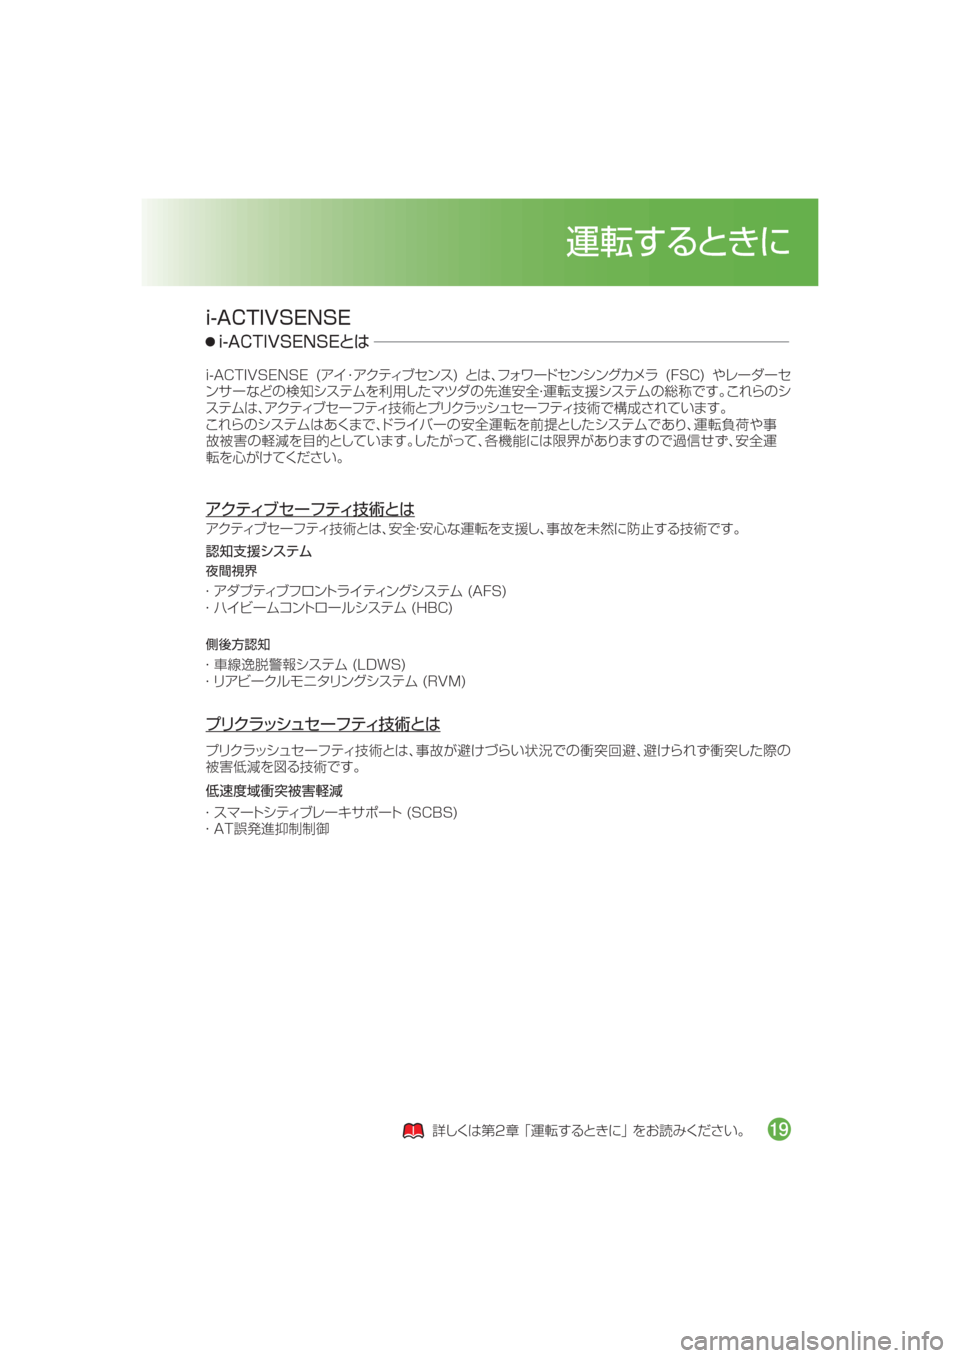 MAZDA MODEL AXELA HYBRID 2014  アクセラハイブリッド｜取扱説明書 (in Japanese) �J��"�$�5�*�7�4�&�/�4�&
�J��"�$�5�*�7�4�&�/�4�&� �	